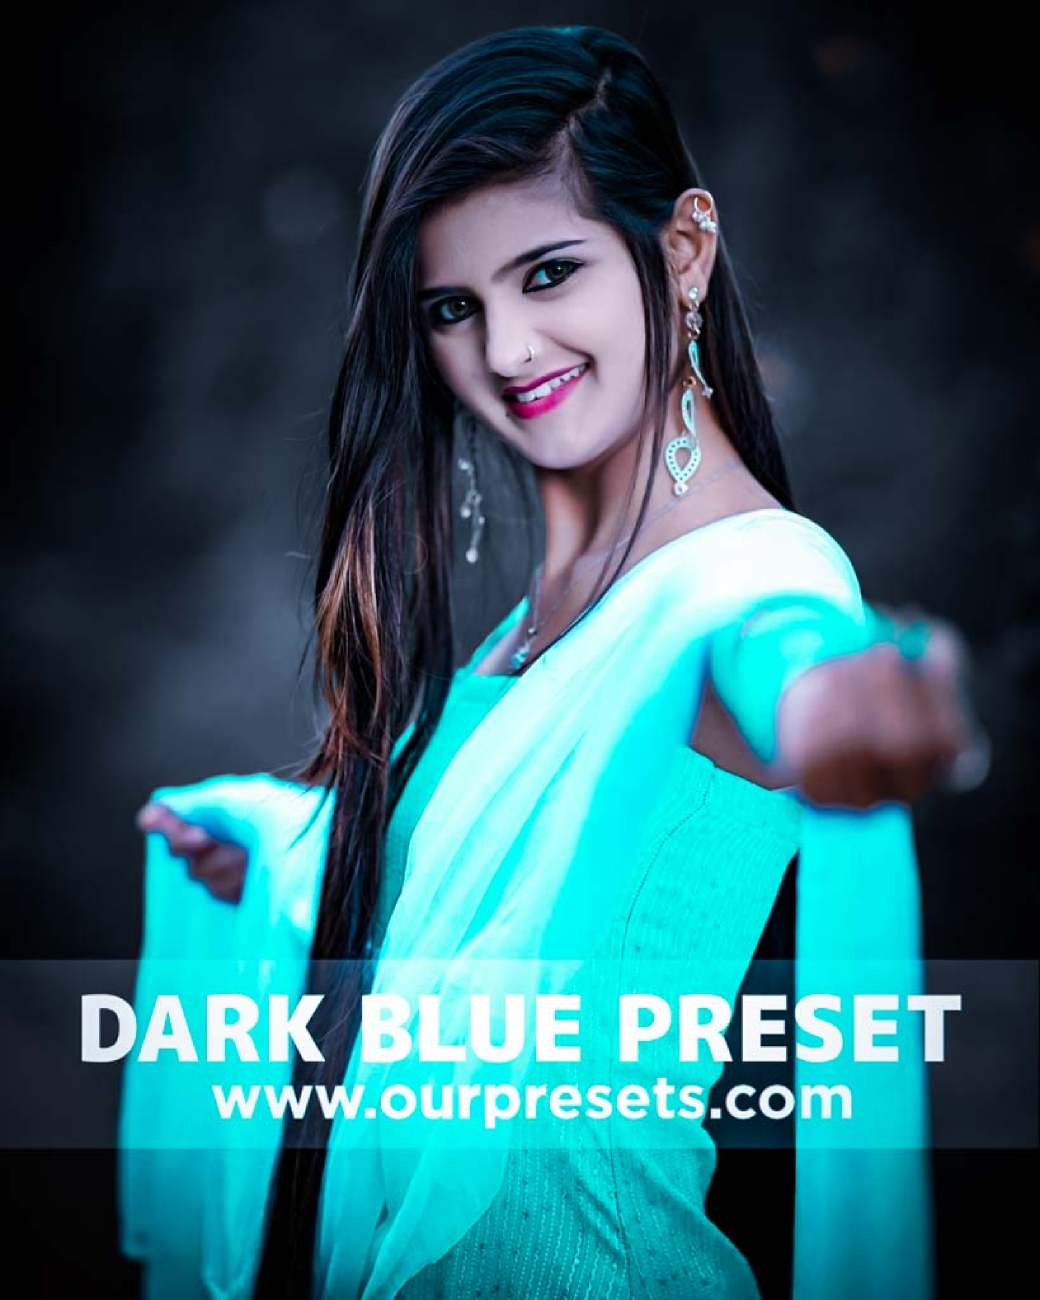 Dark blue preset